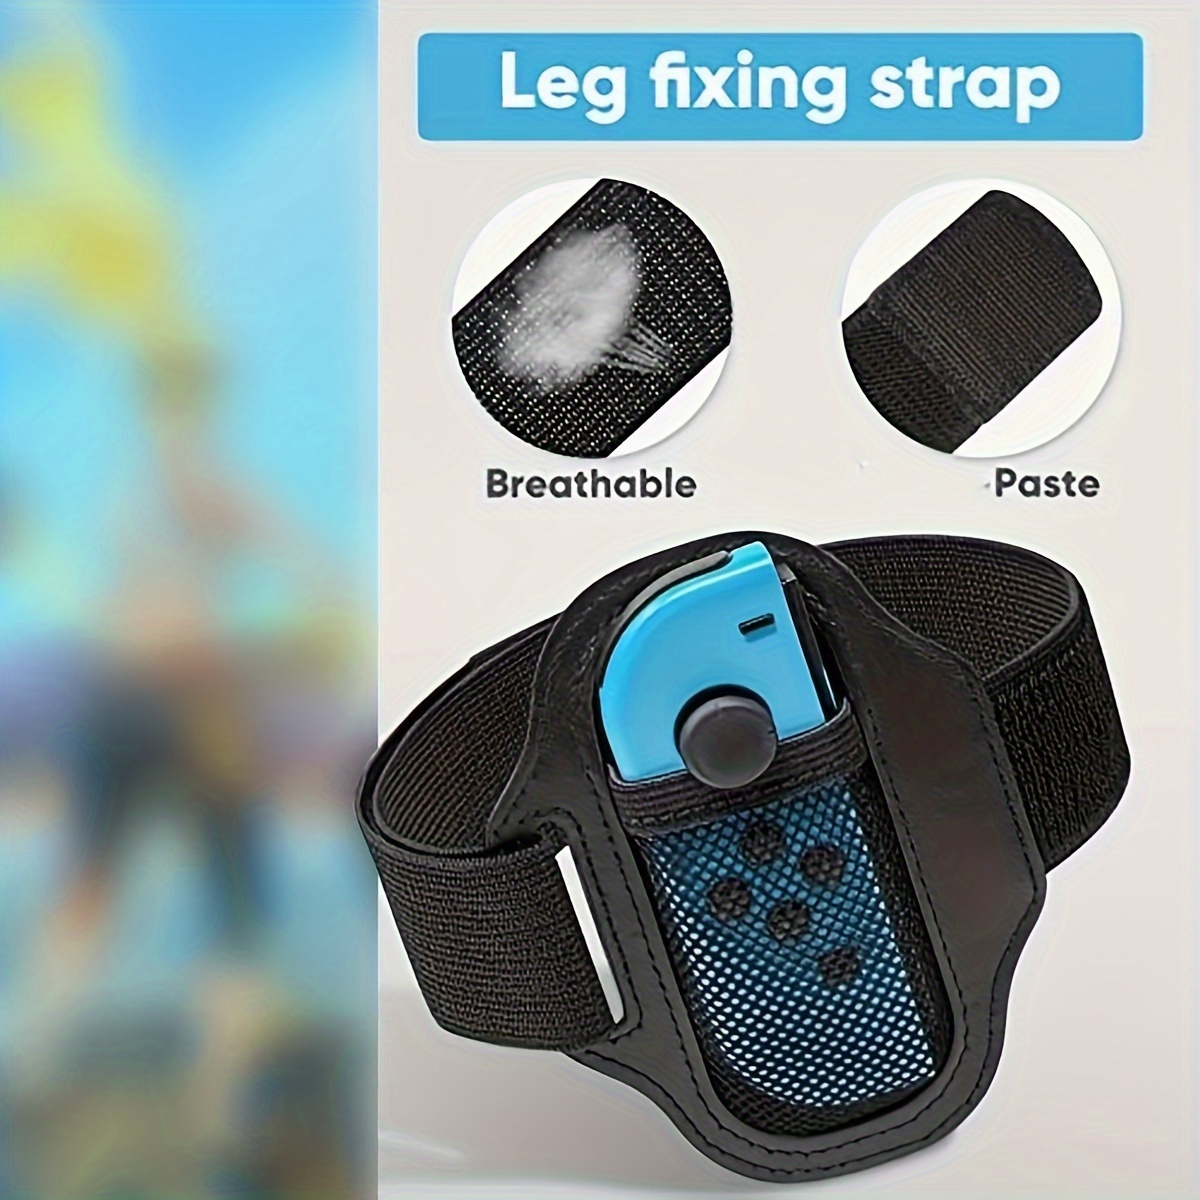 Adjustable Leg Strap for Nintendo Switch